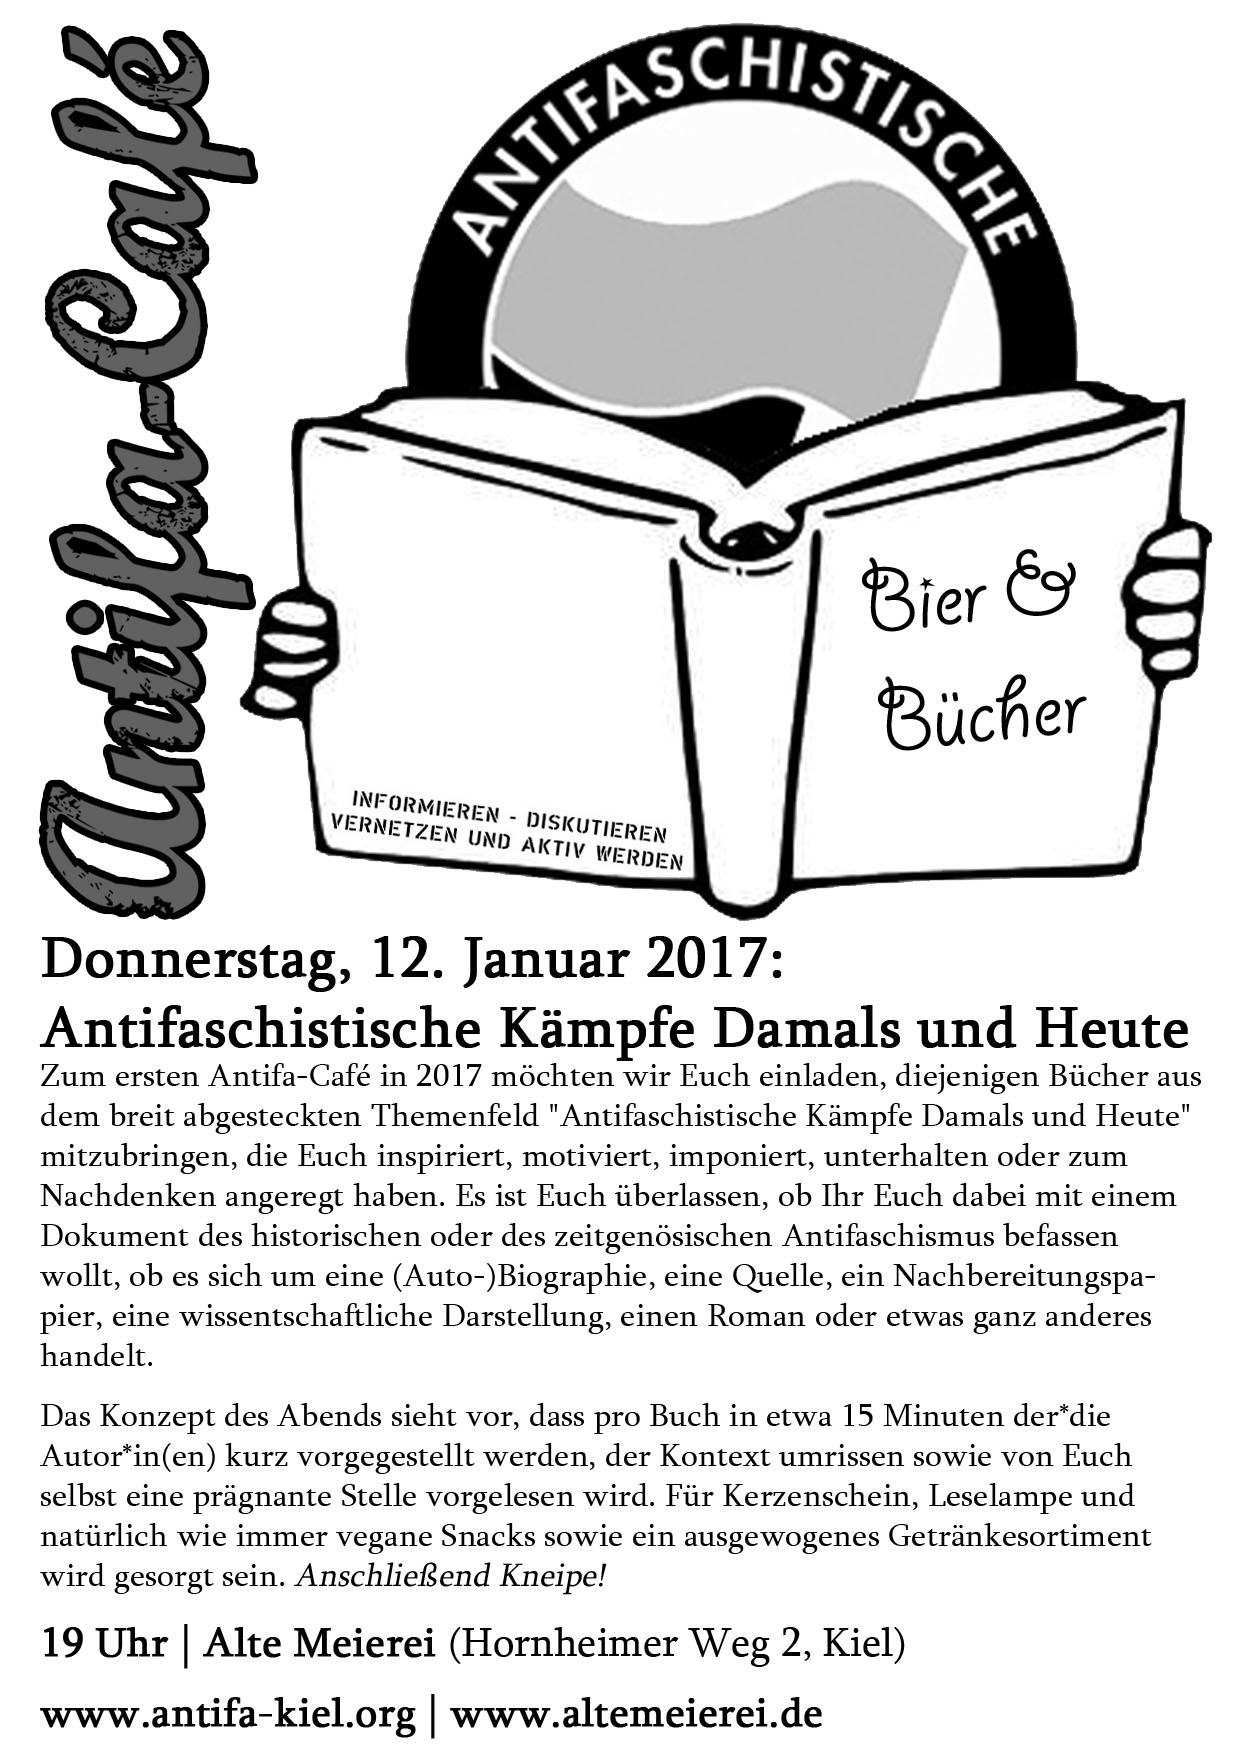 http://www.neu.antifa-kiel.org/wp-content/uploads/import/antifa-cafe/bierundbuecher.jpg